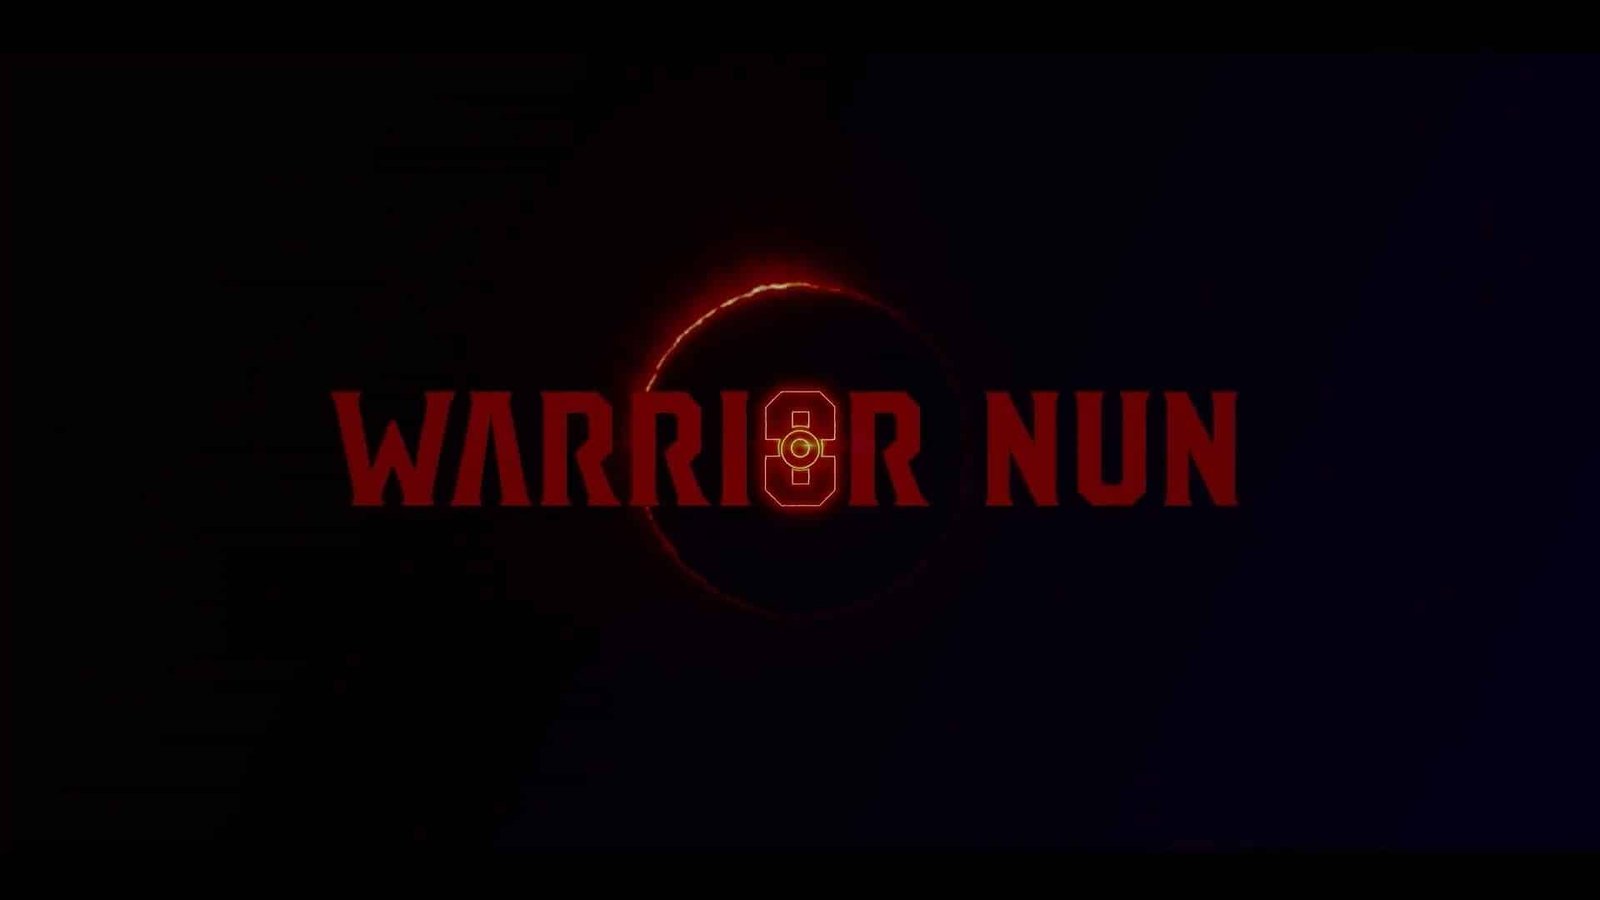 Warrior Nun Season 2 Release Date